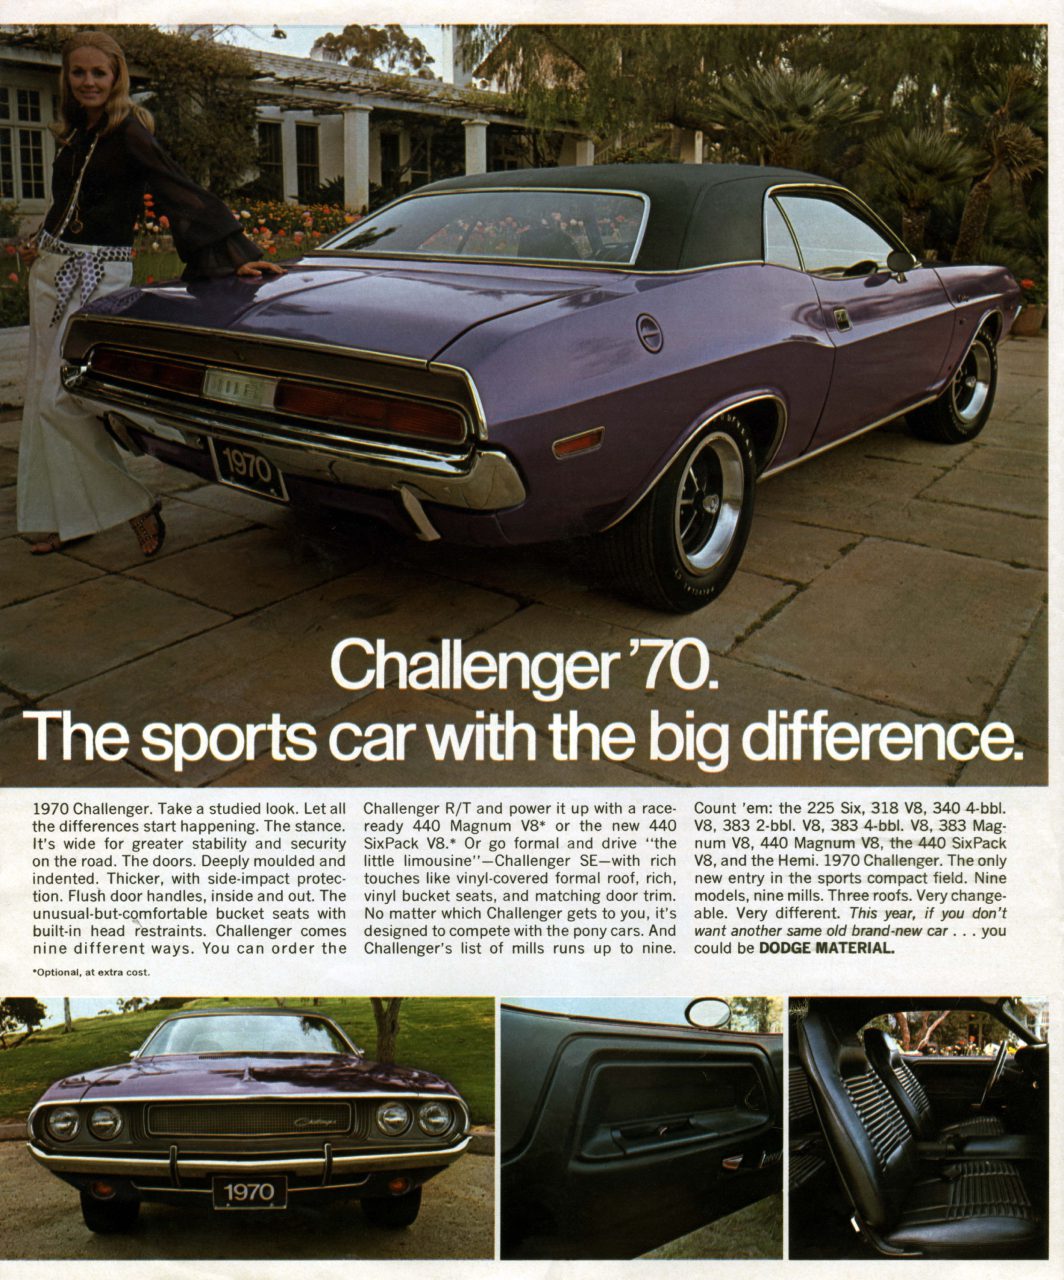 1970 Dodge Challenger advertisement
